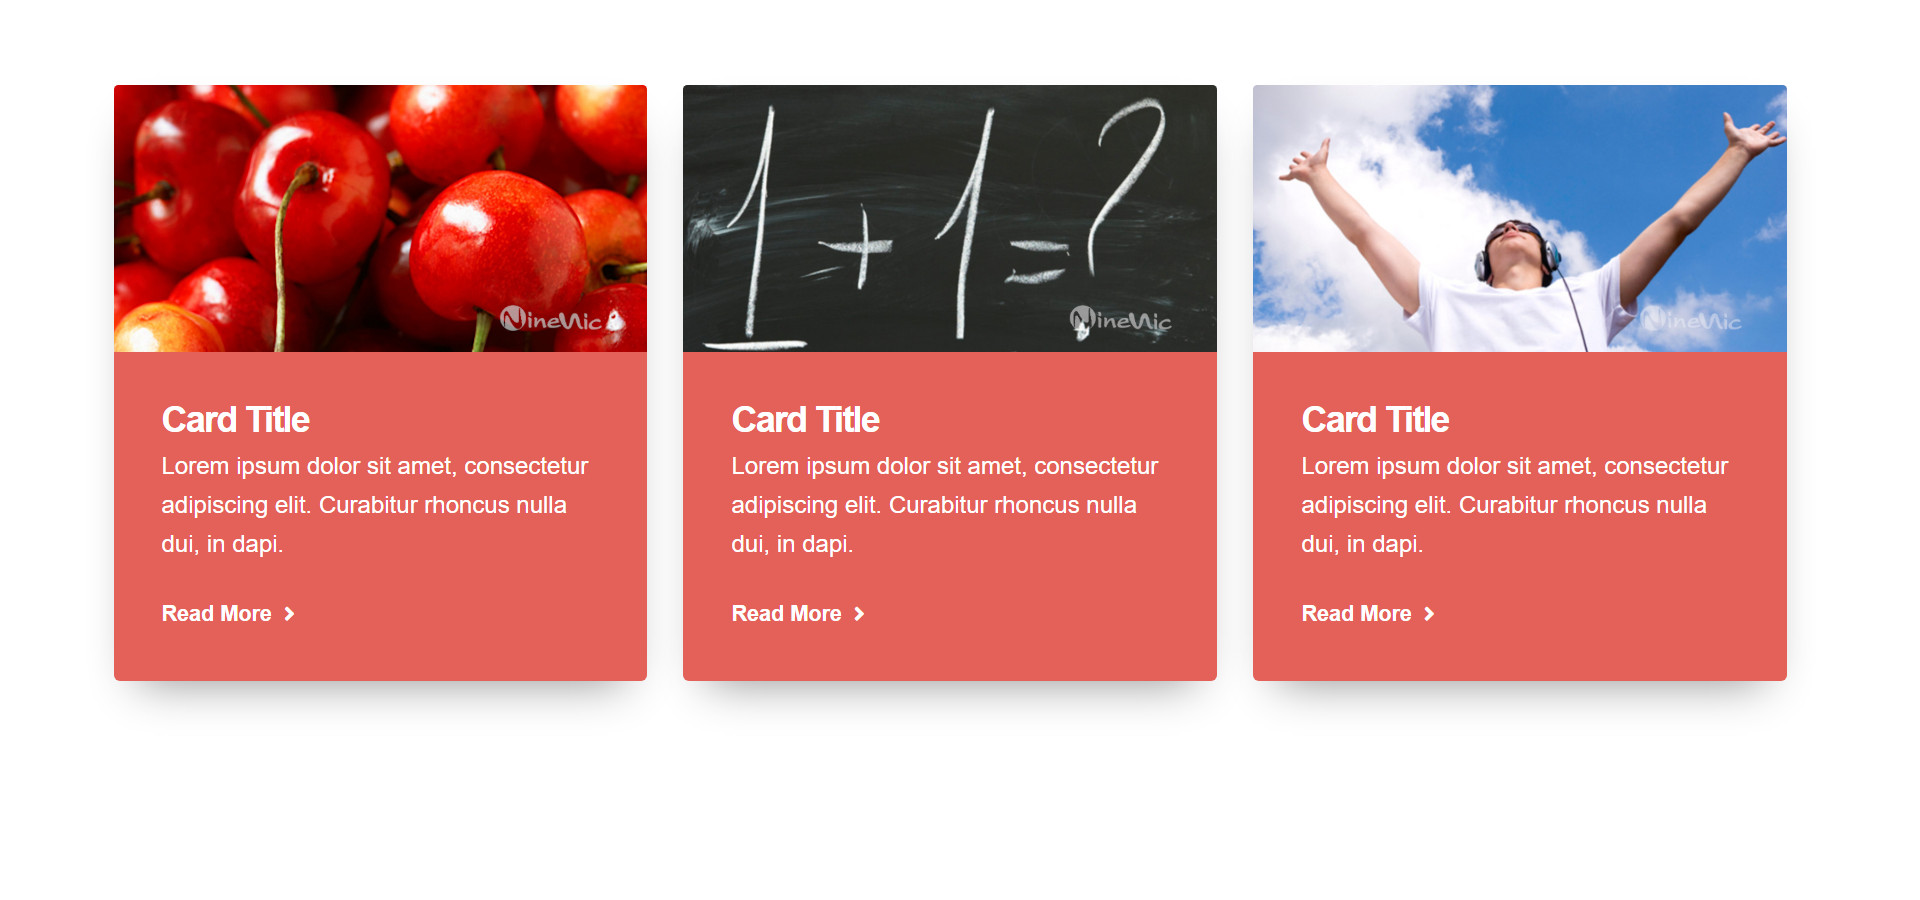 Shortcodes cards - shadow-3-images-top-bg-color-secondary-3-column แนะนำ เว็บไซต์สำเร็จรูป NineNIC